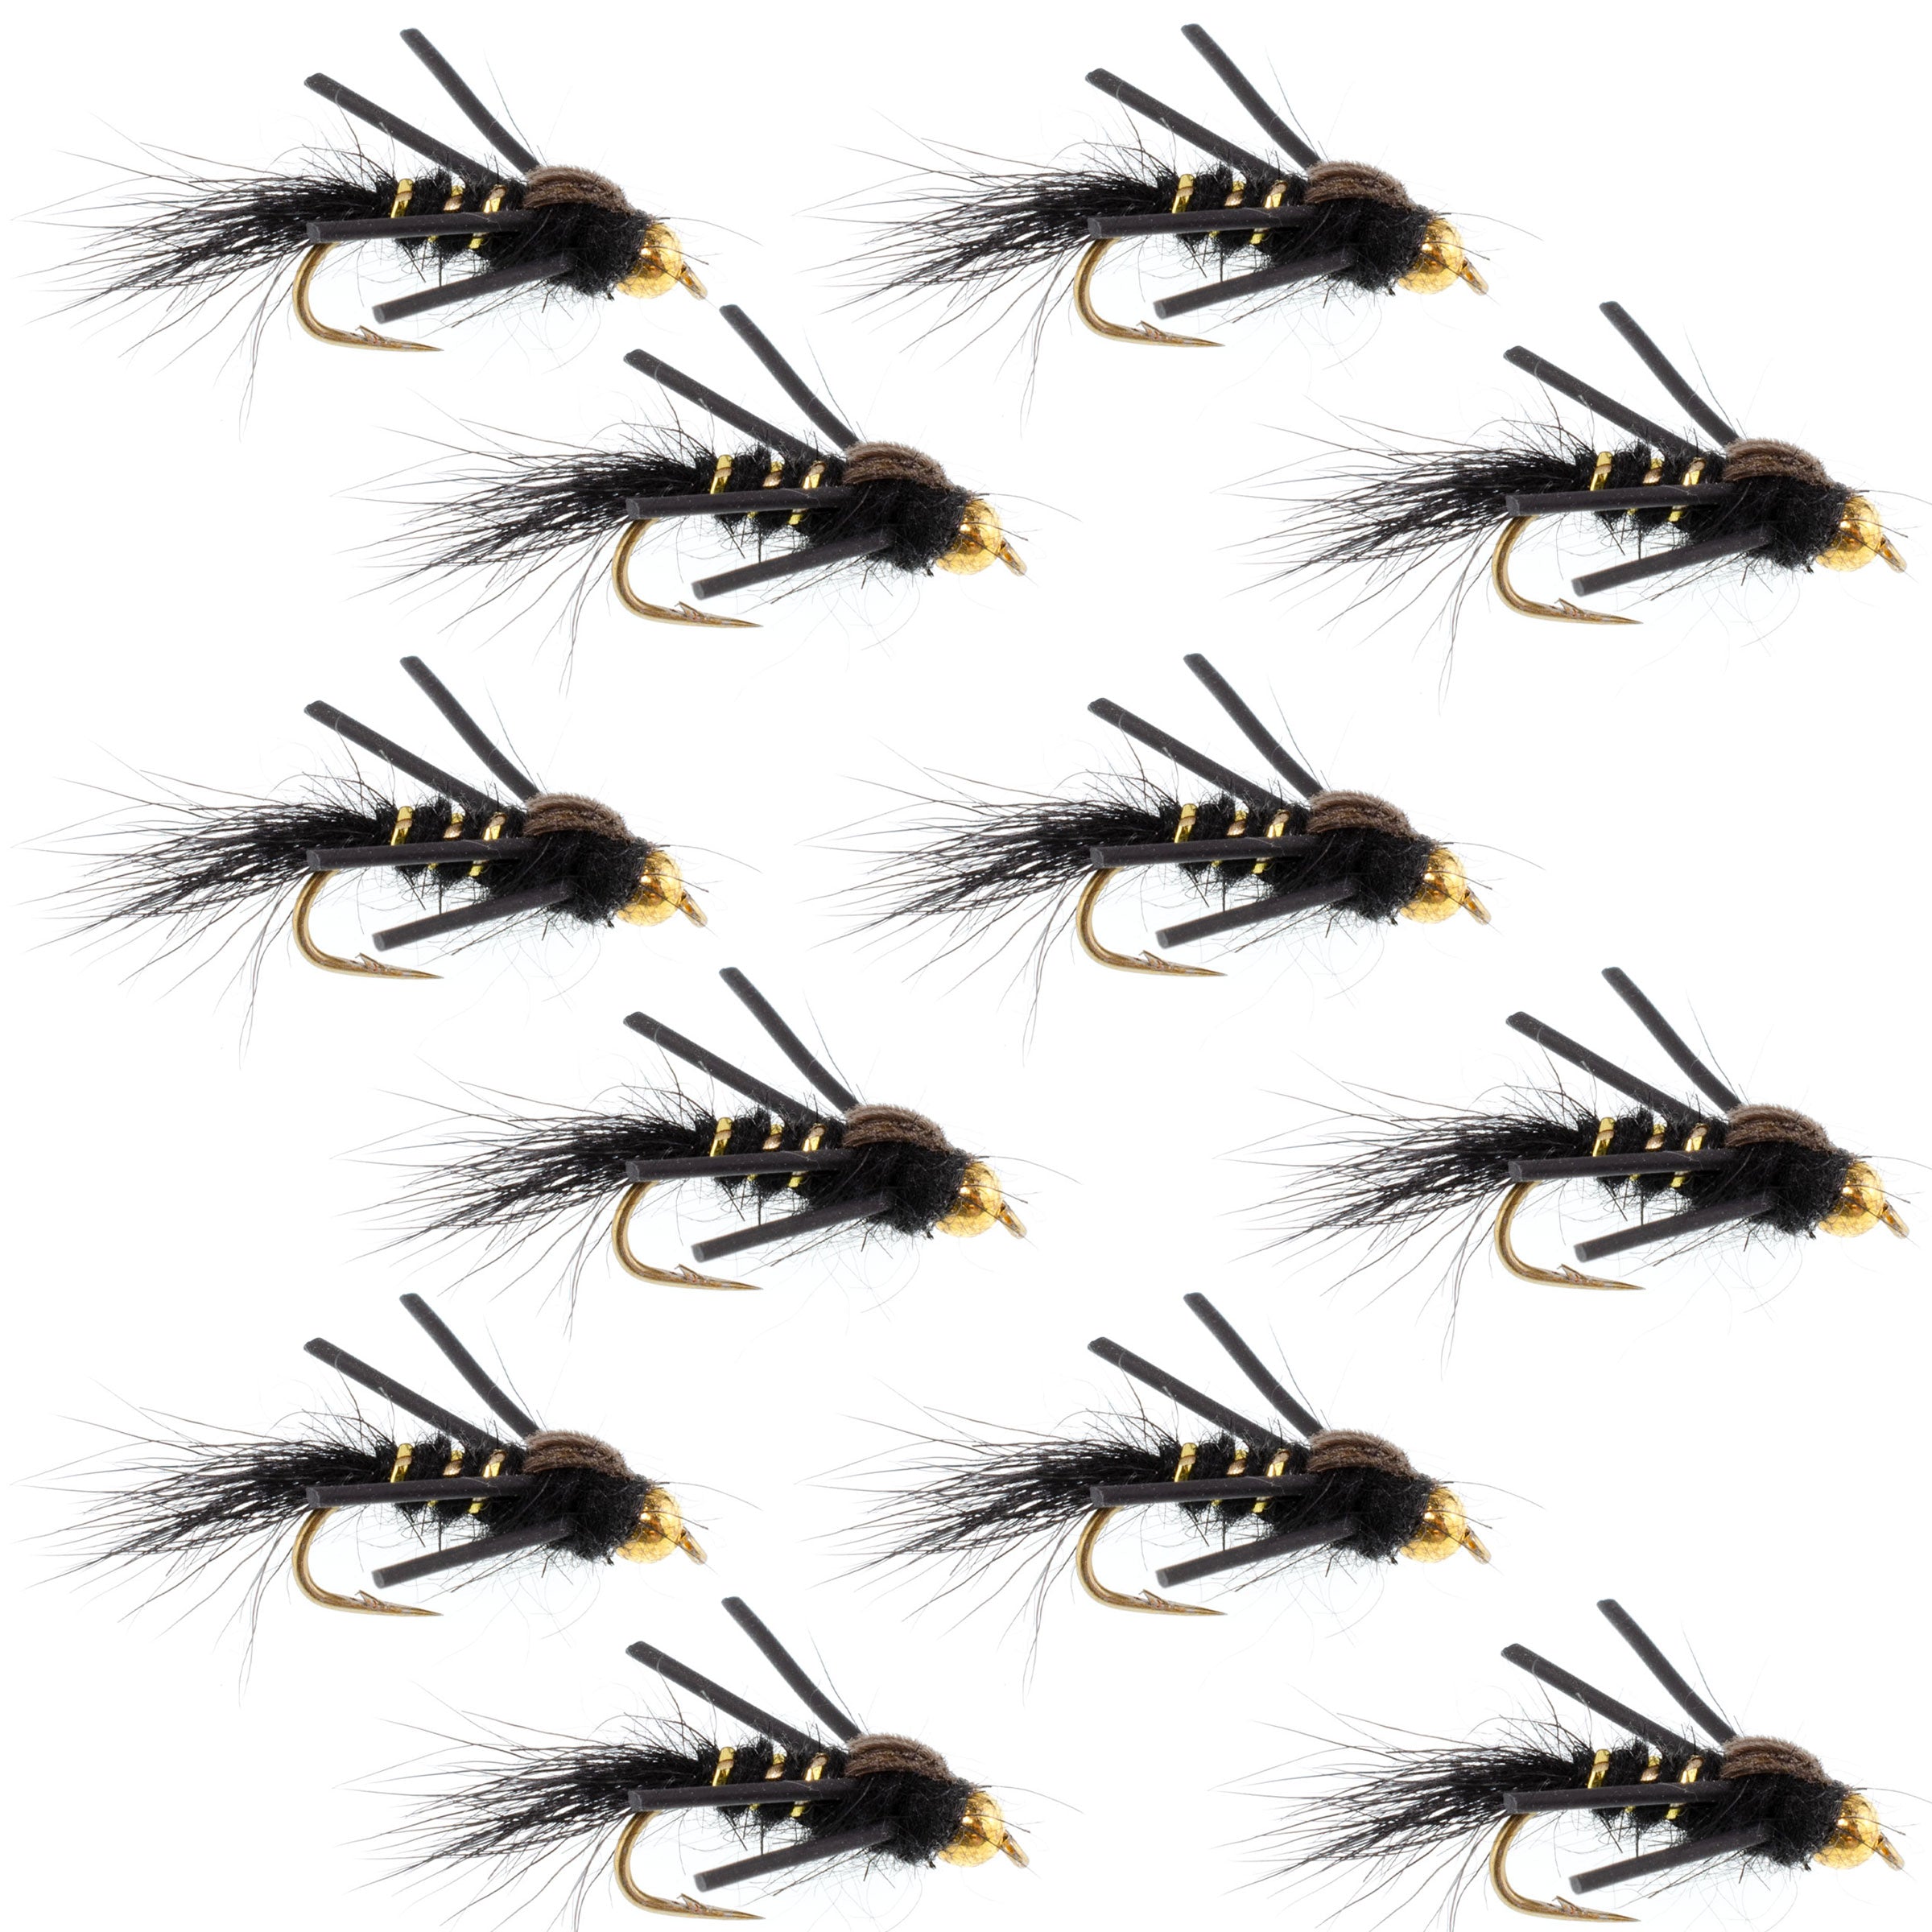 Tungsten Bead Head Rubber Legs Black Gold-Ribbed Hare's Ear Trout Fly Nymph - 1 Dozen Flies Hook Size 12